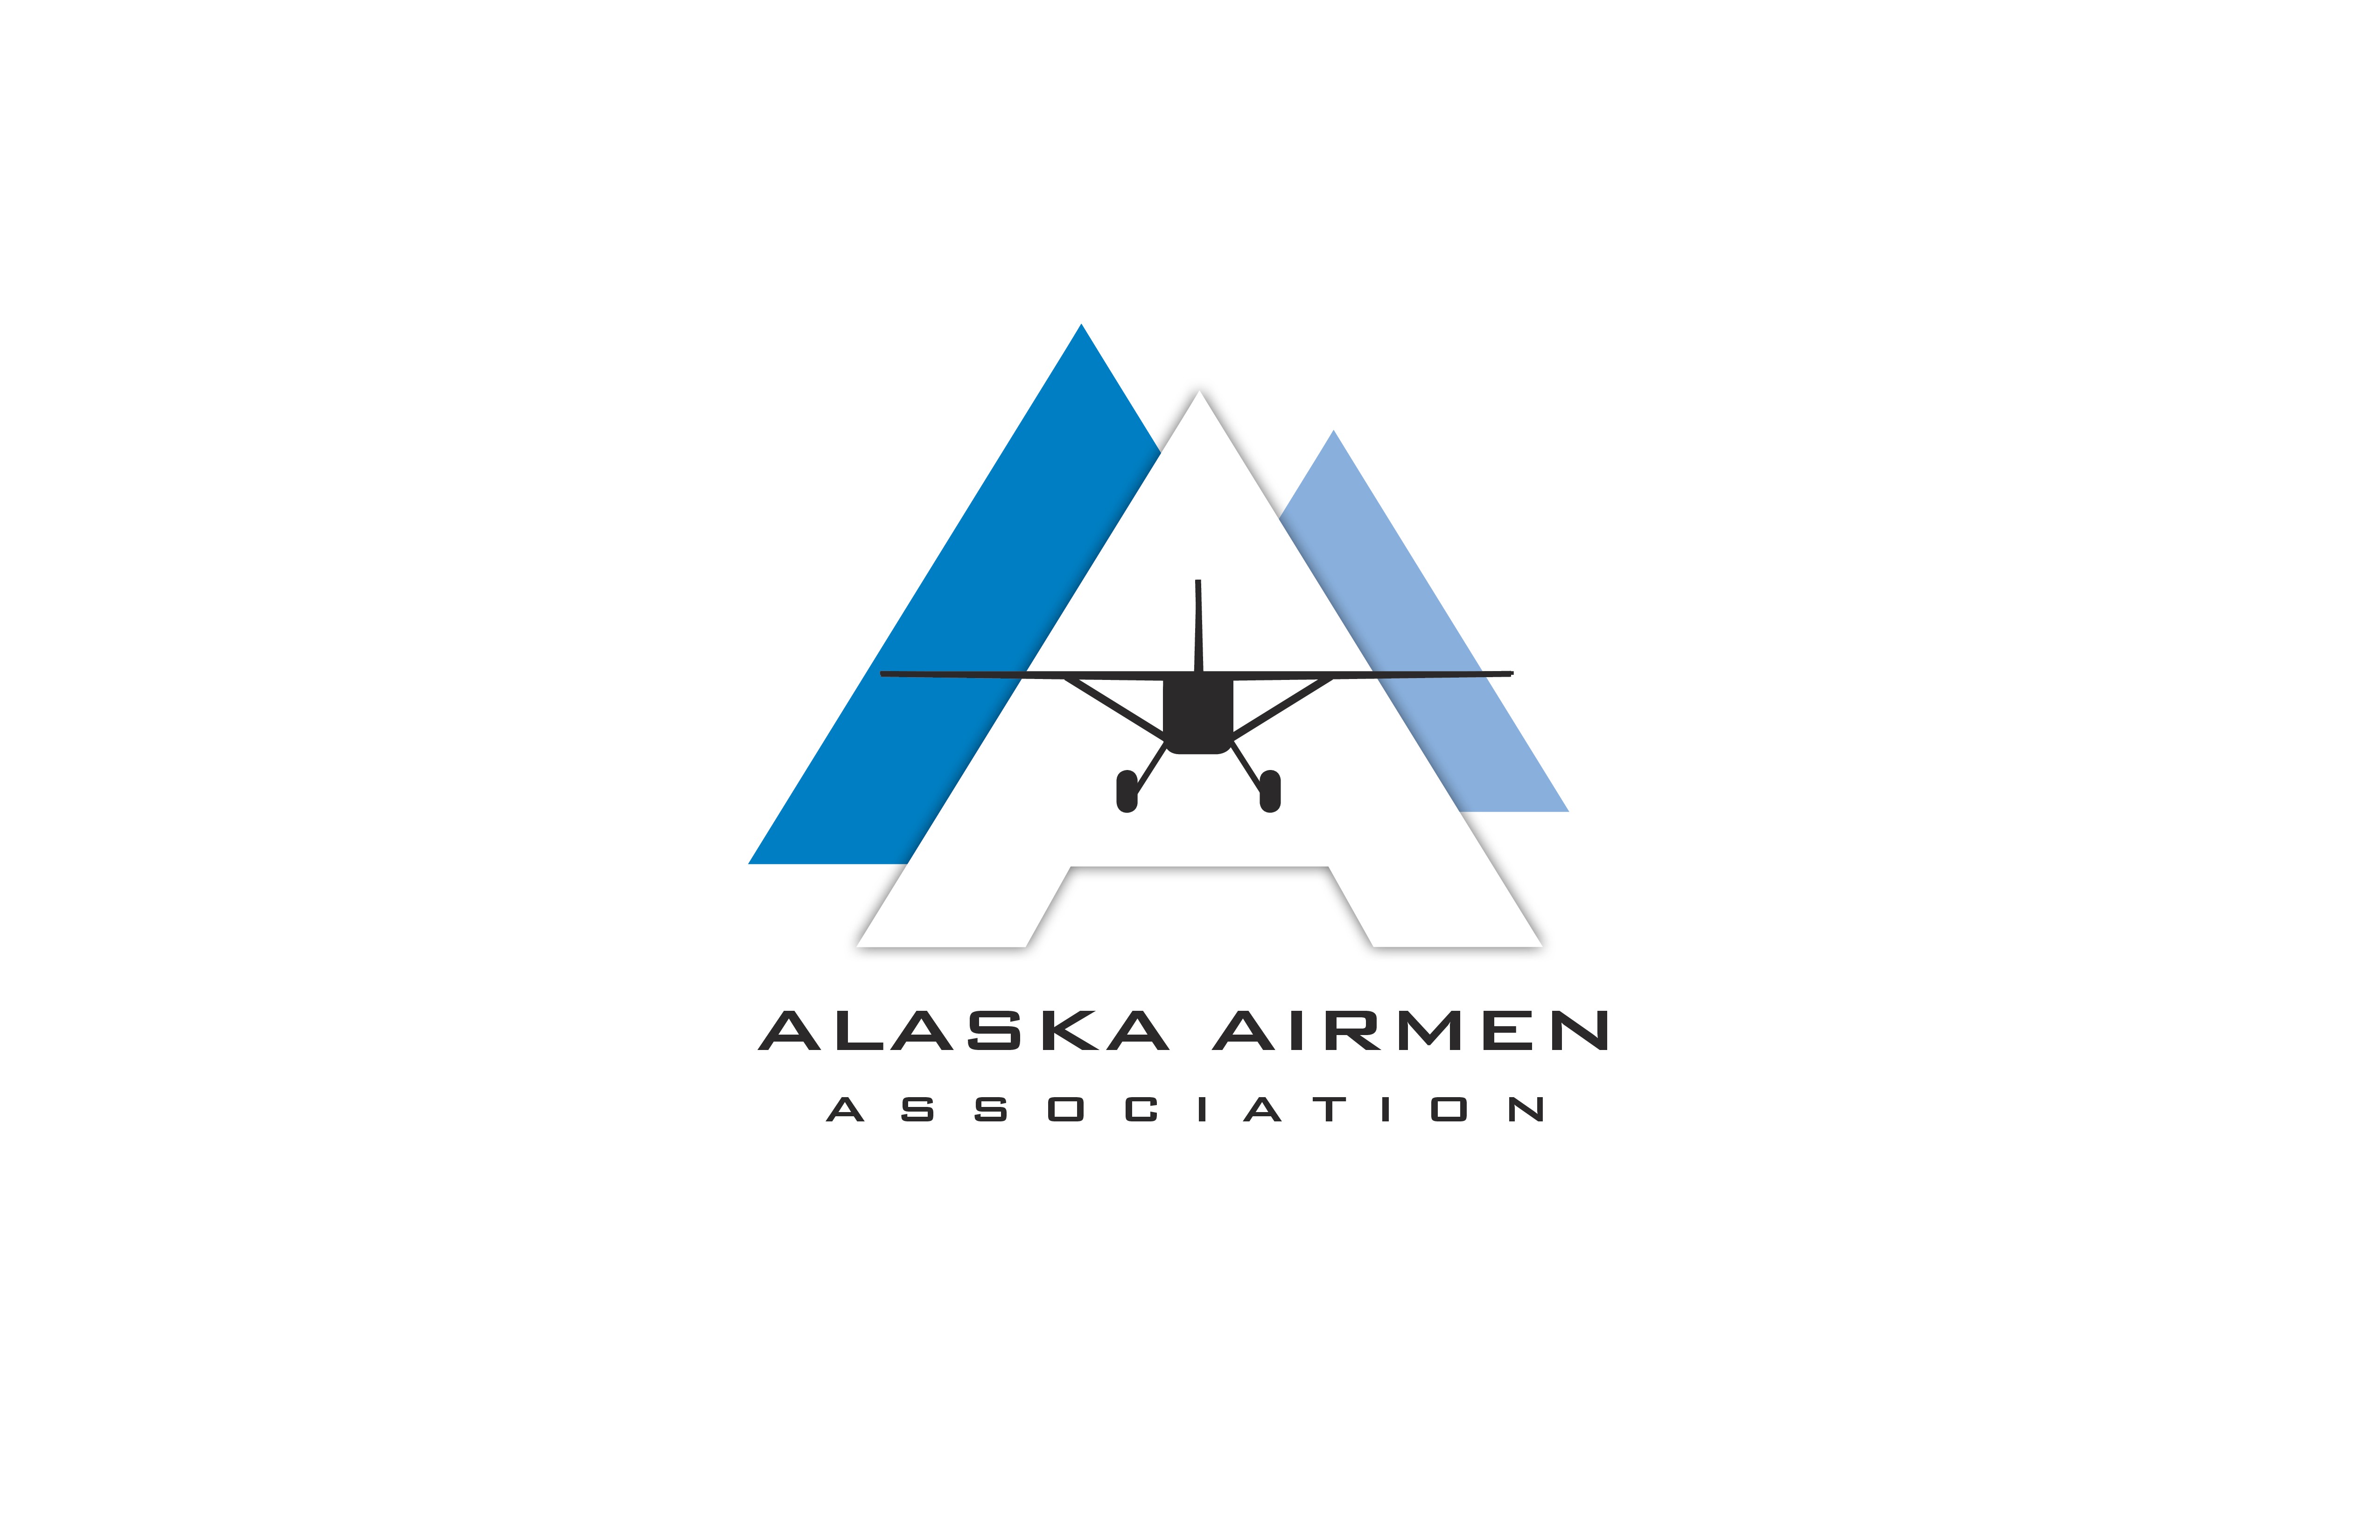 Alaska Airmen Association has 2,200 in Alaska and the Lower 48 promoting general aviation.